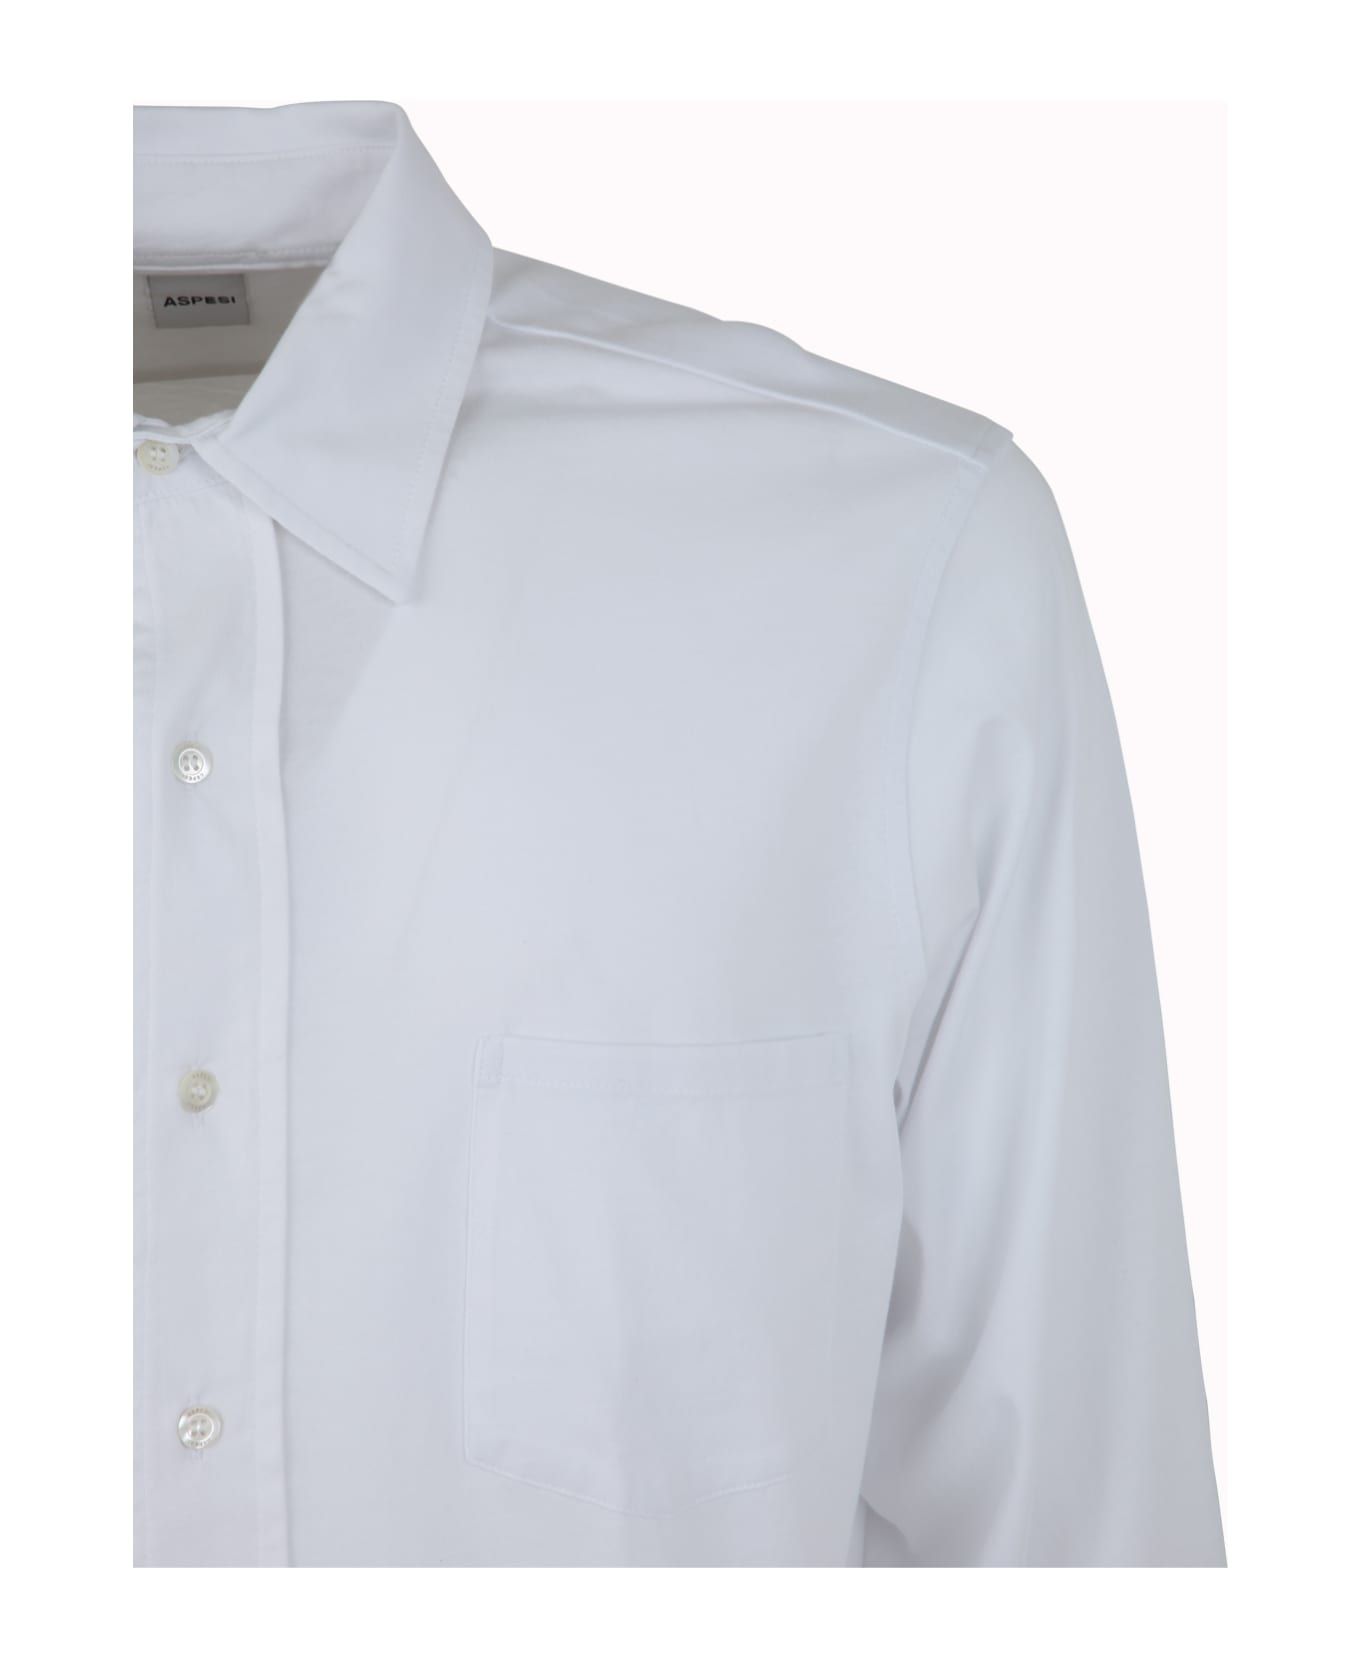 Aspesi Mod Ay34 Shirt - White シャツ